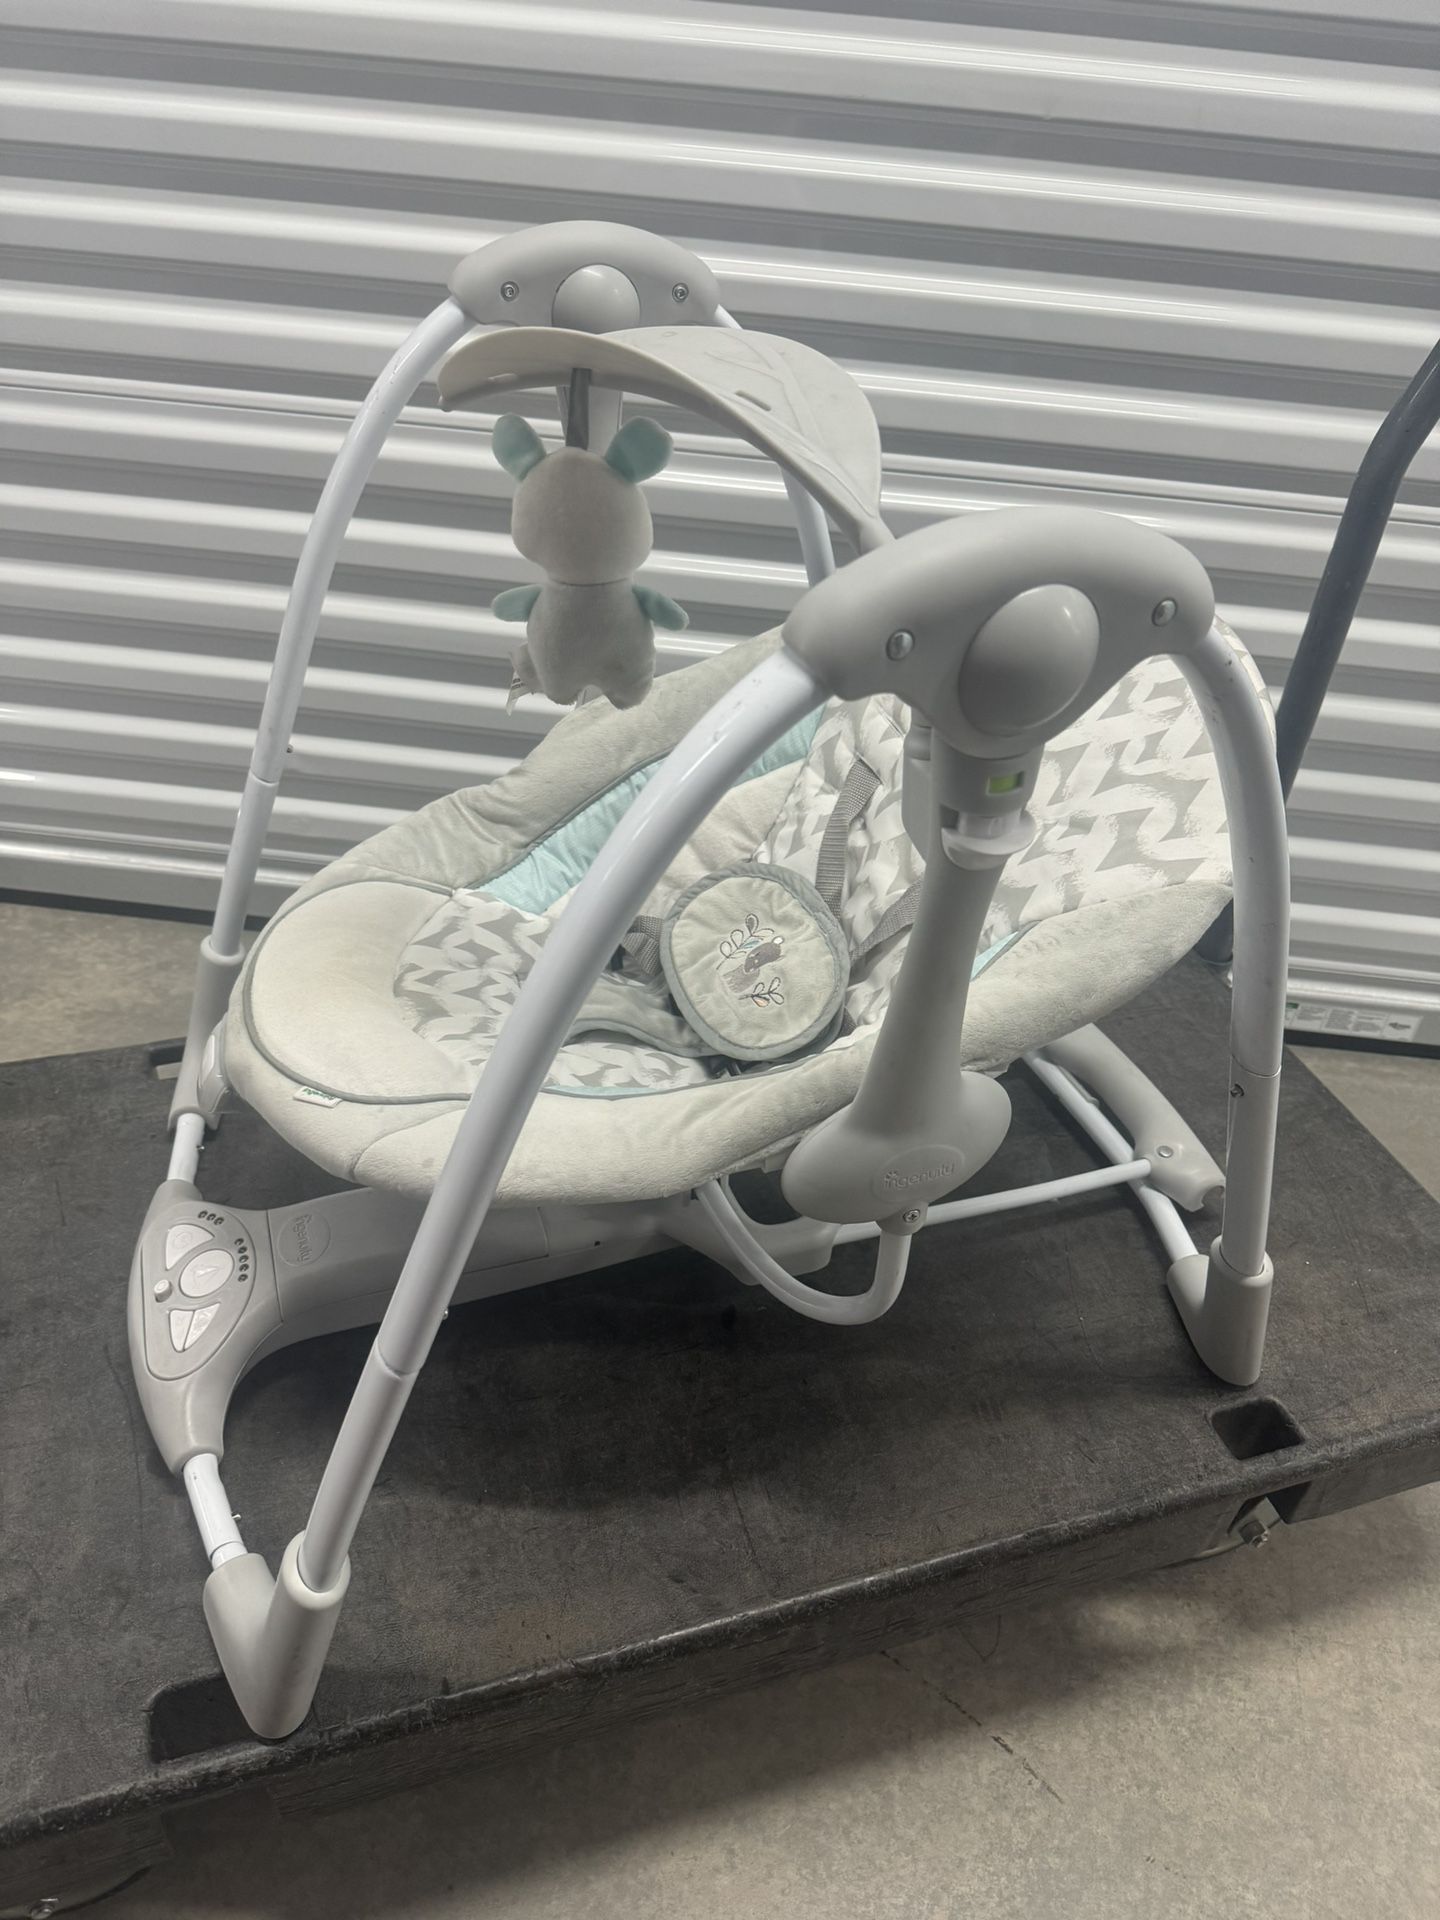 Ingenuity Convert Me 2-in-1 Portable Vibrating Baby Swing Nash, Infant, Gray